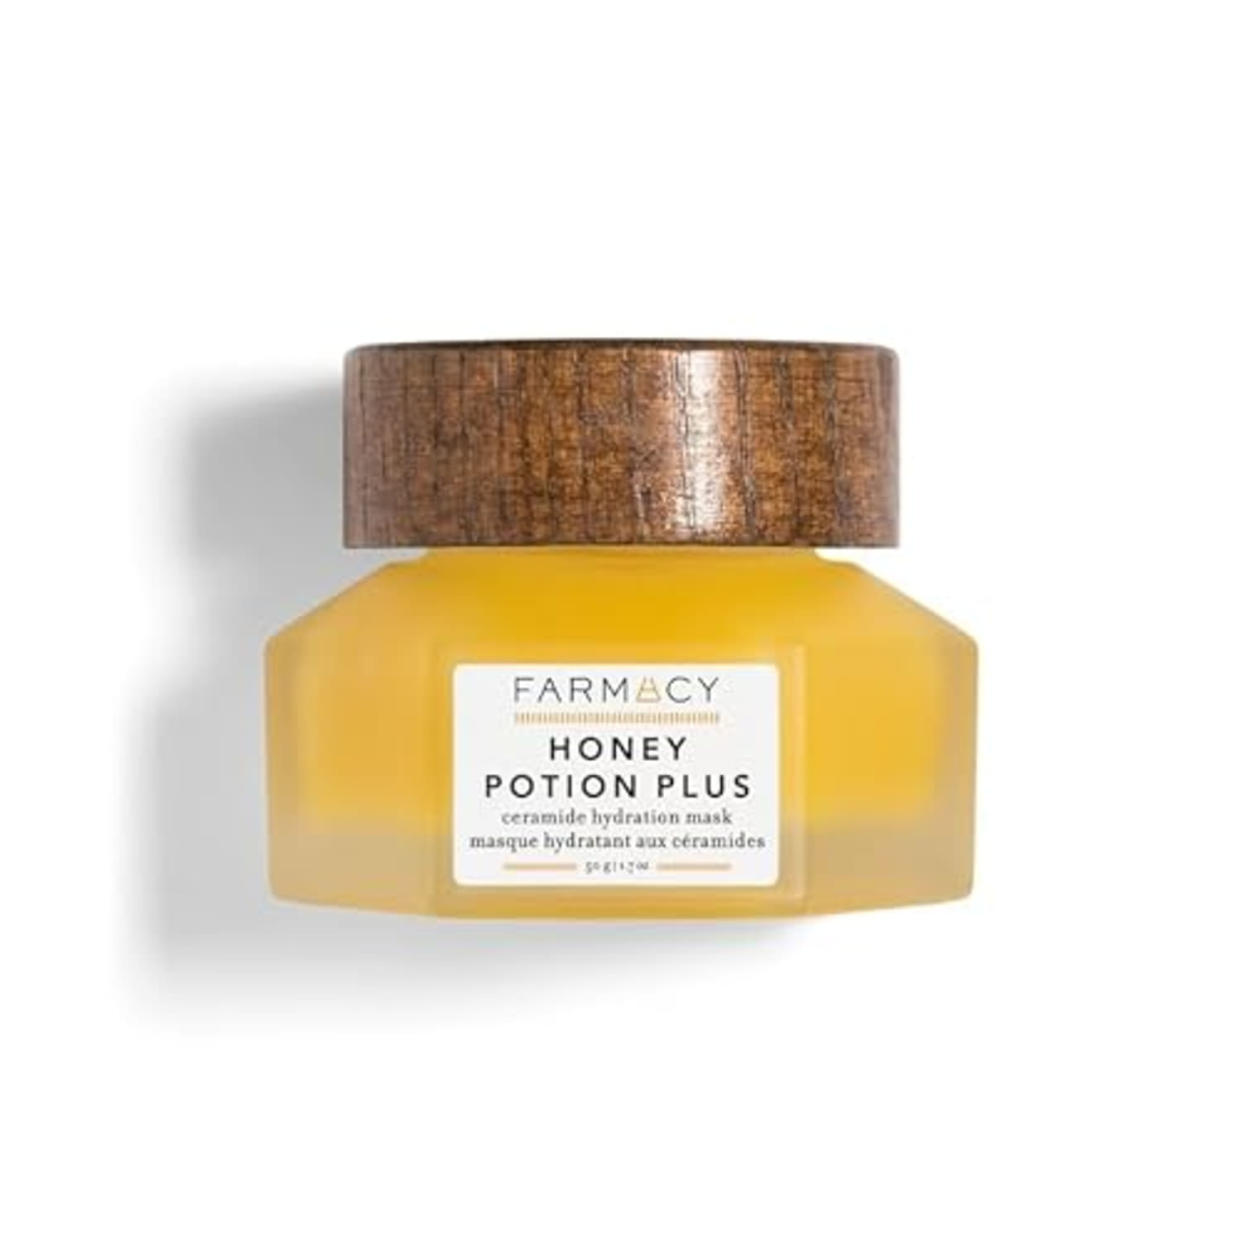 Farmacy Honey Potion Plus Face Mask - Antioxidant Rich Hydration Mask - Natural Moisturizing Facial Mask (1.7 Ounce/ 50 G) (AMAZON)